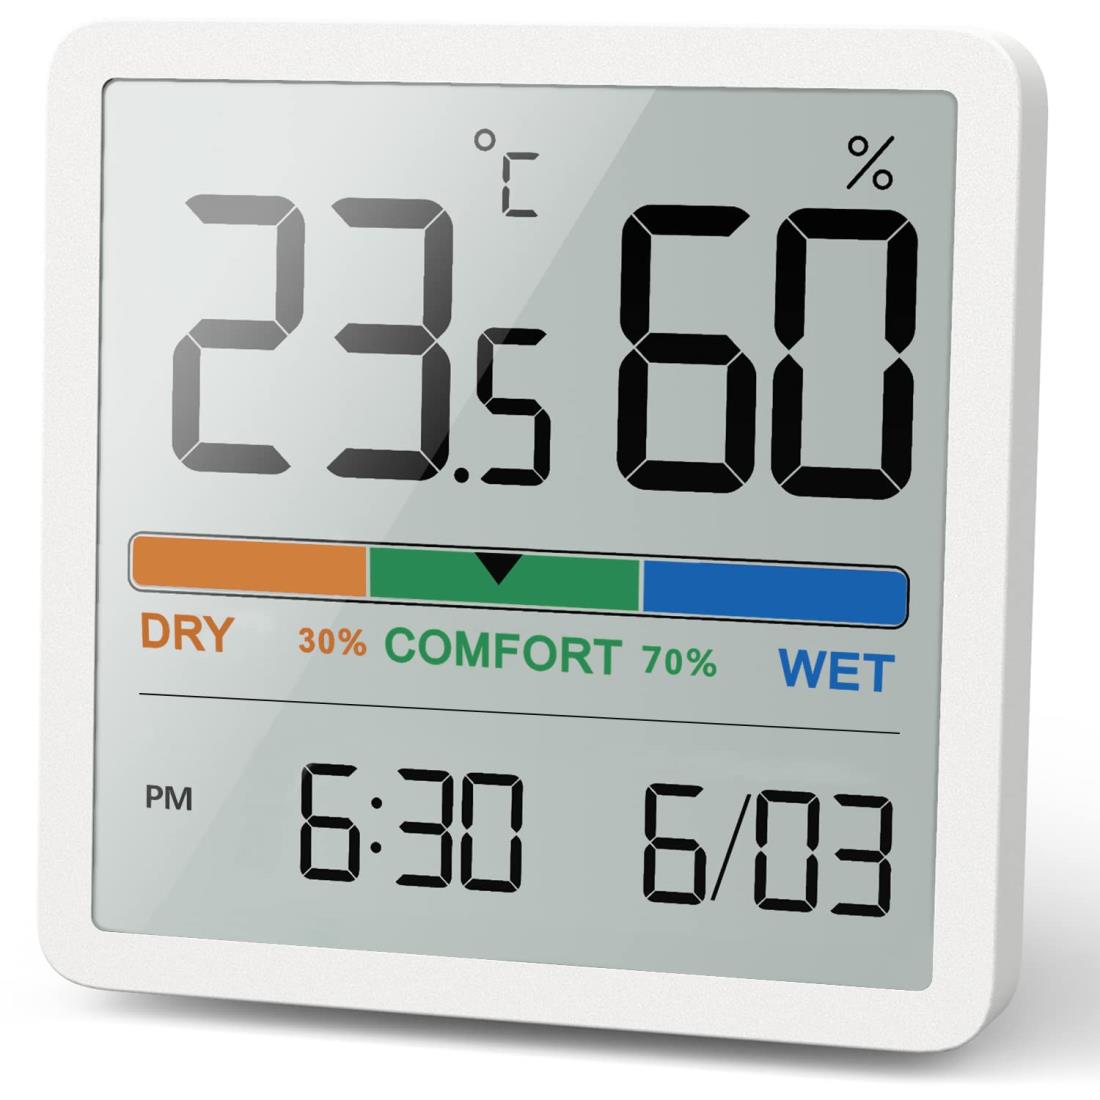 NOKLEAD 温湿度計 デジタル湿度計 室内温度計 壁掛け 卓上スタンド マグネット快適度表示 デート時計付き LCD見やすい大画面 白 梅雨対策 熱中症対策予防 肌の潤い インフル対策 健康管理 温湿度計測定器